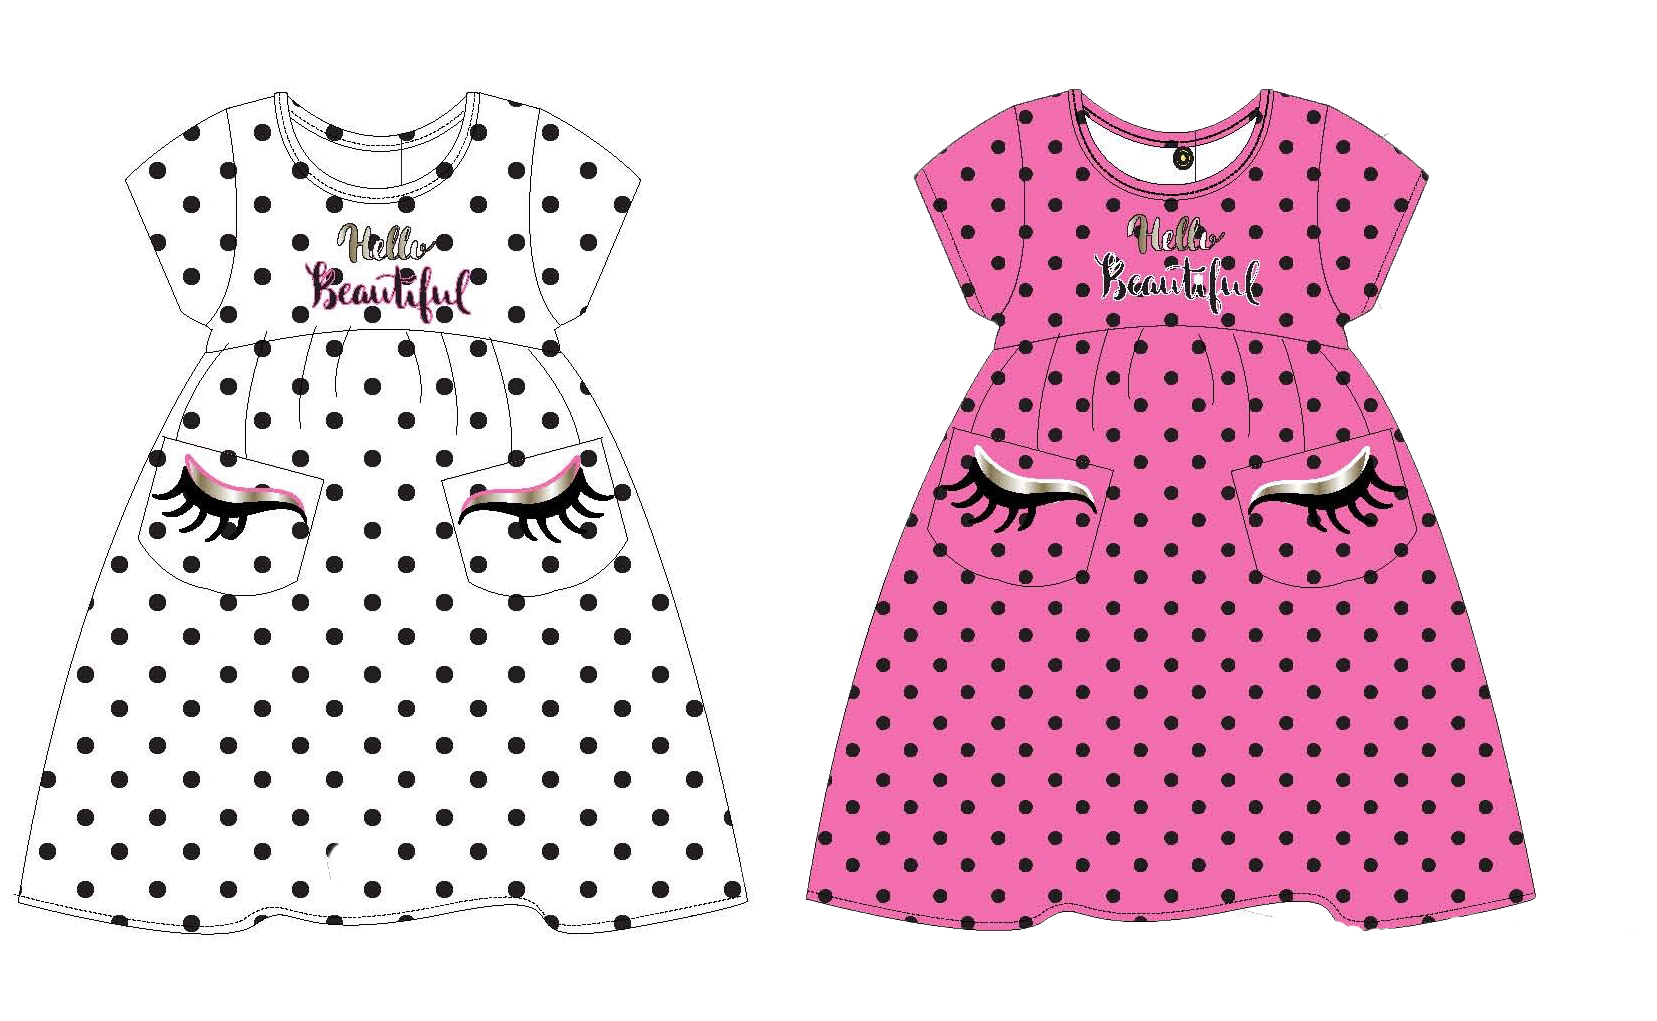 Infant Girl's Knit Hello Beautiful Dresses w/ Polka Dots & Blush Eye-Lash Print - Sizes 12M-24M